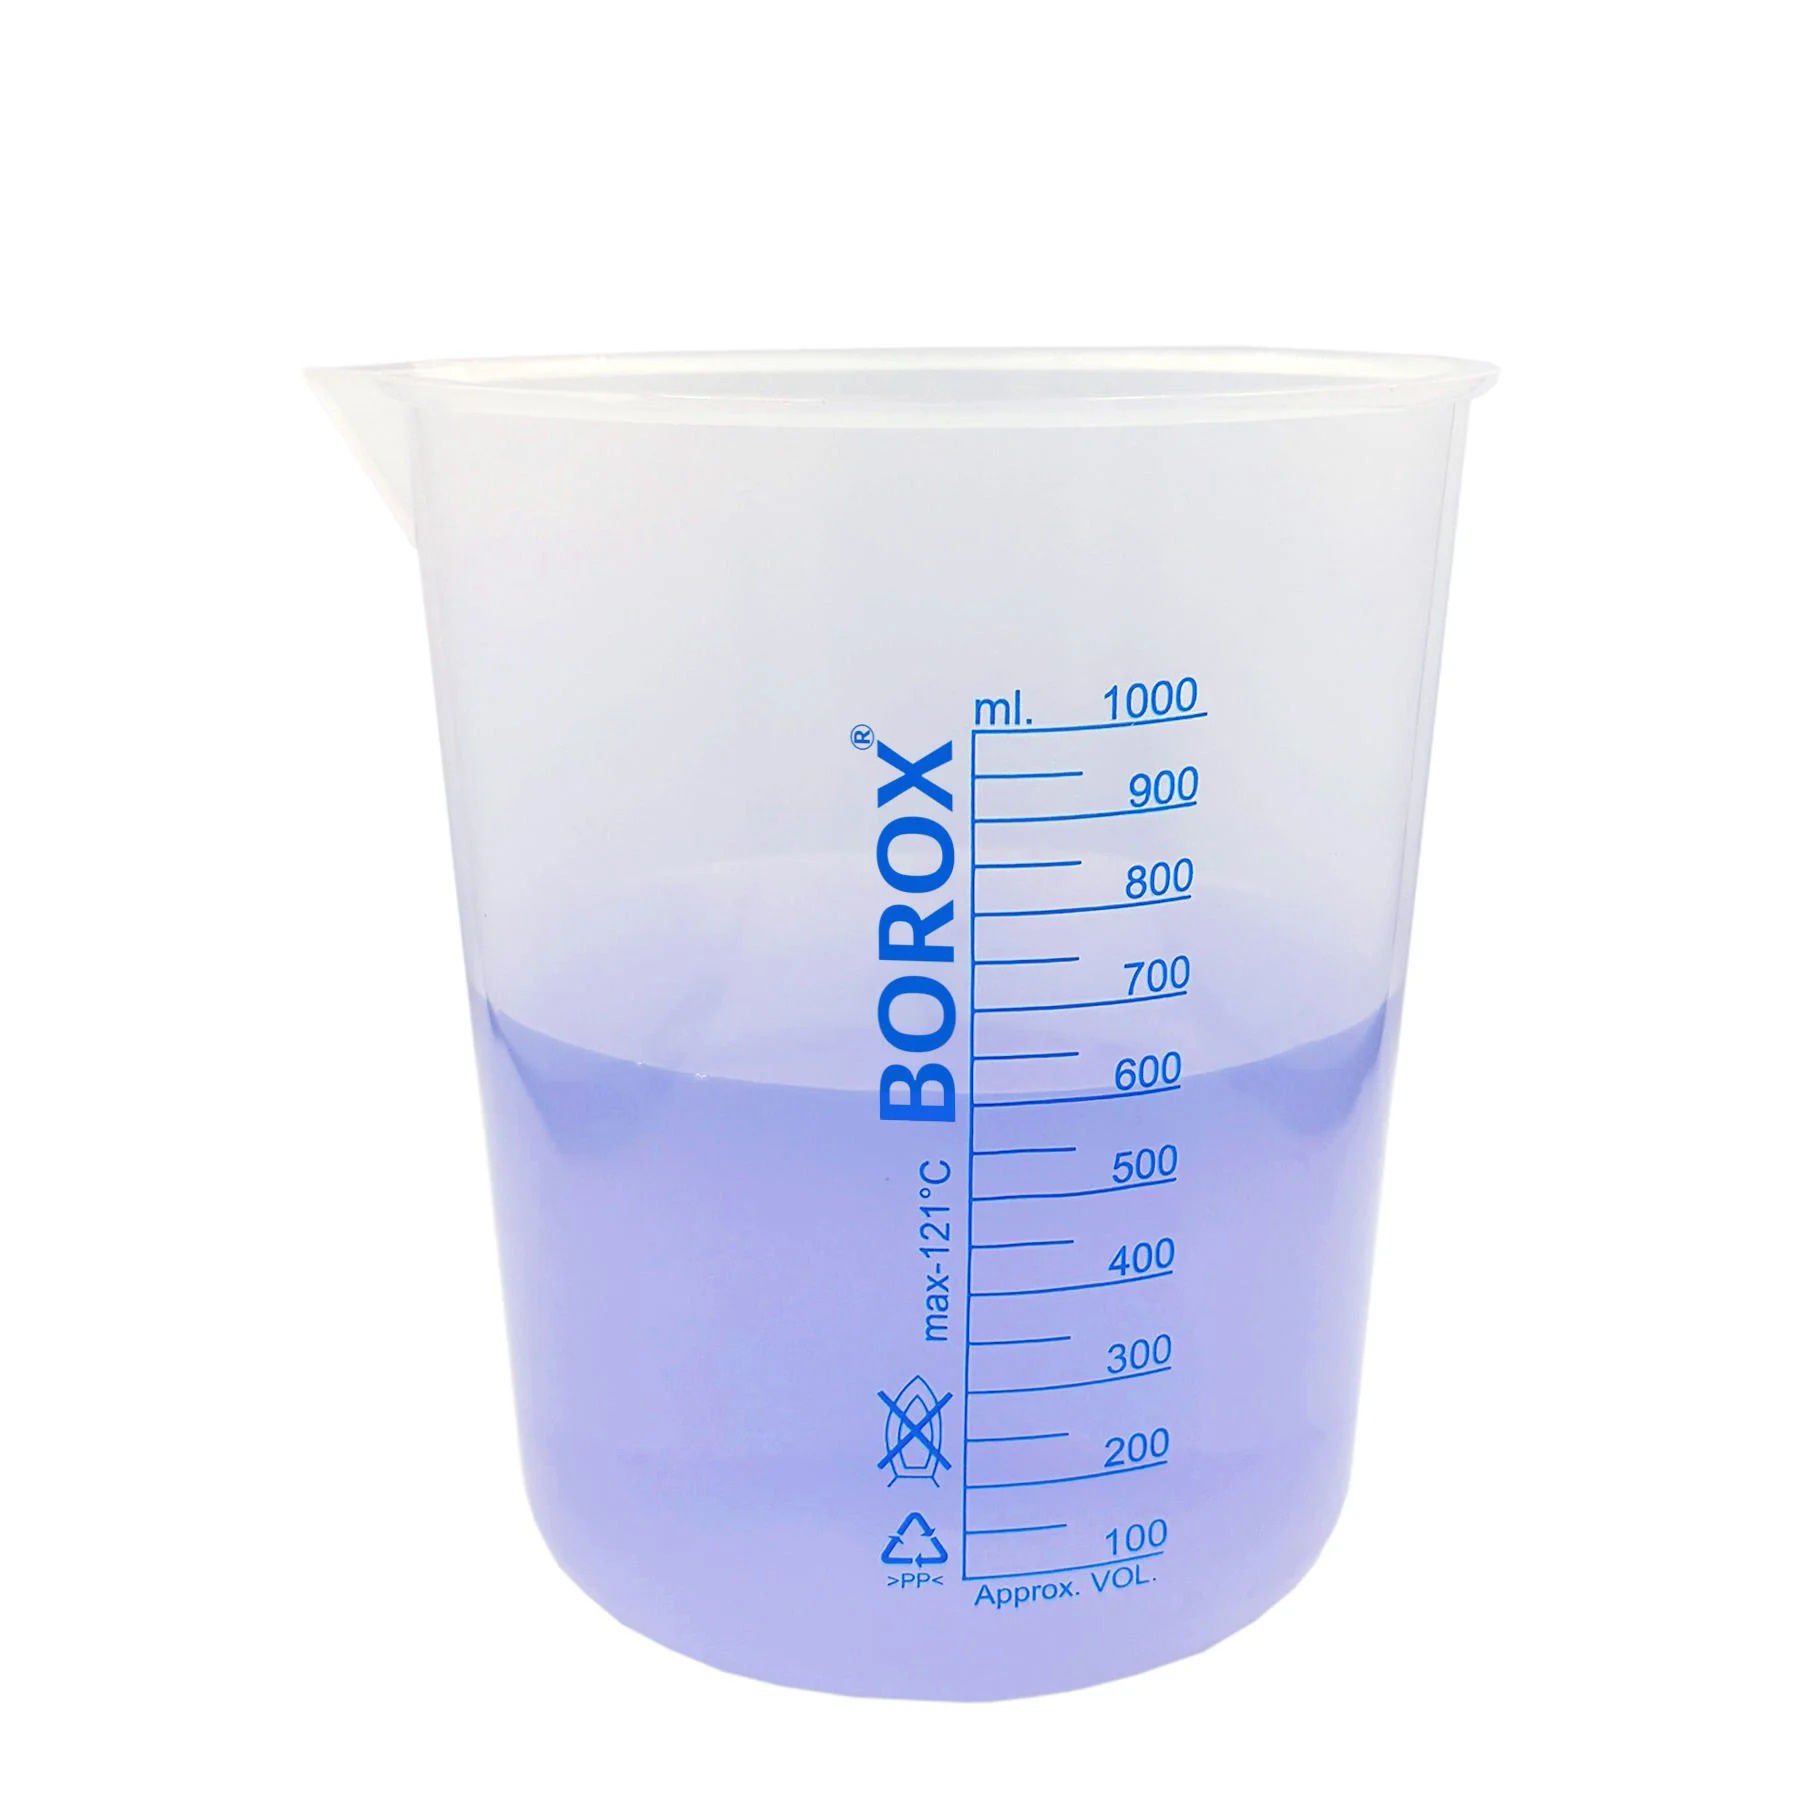 Borox Plastik Beher 1000 ml - Ölçü Kabı - Mavi Skala